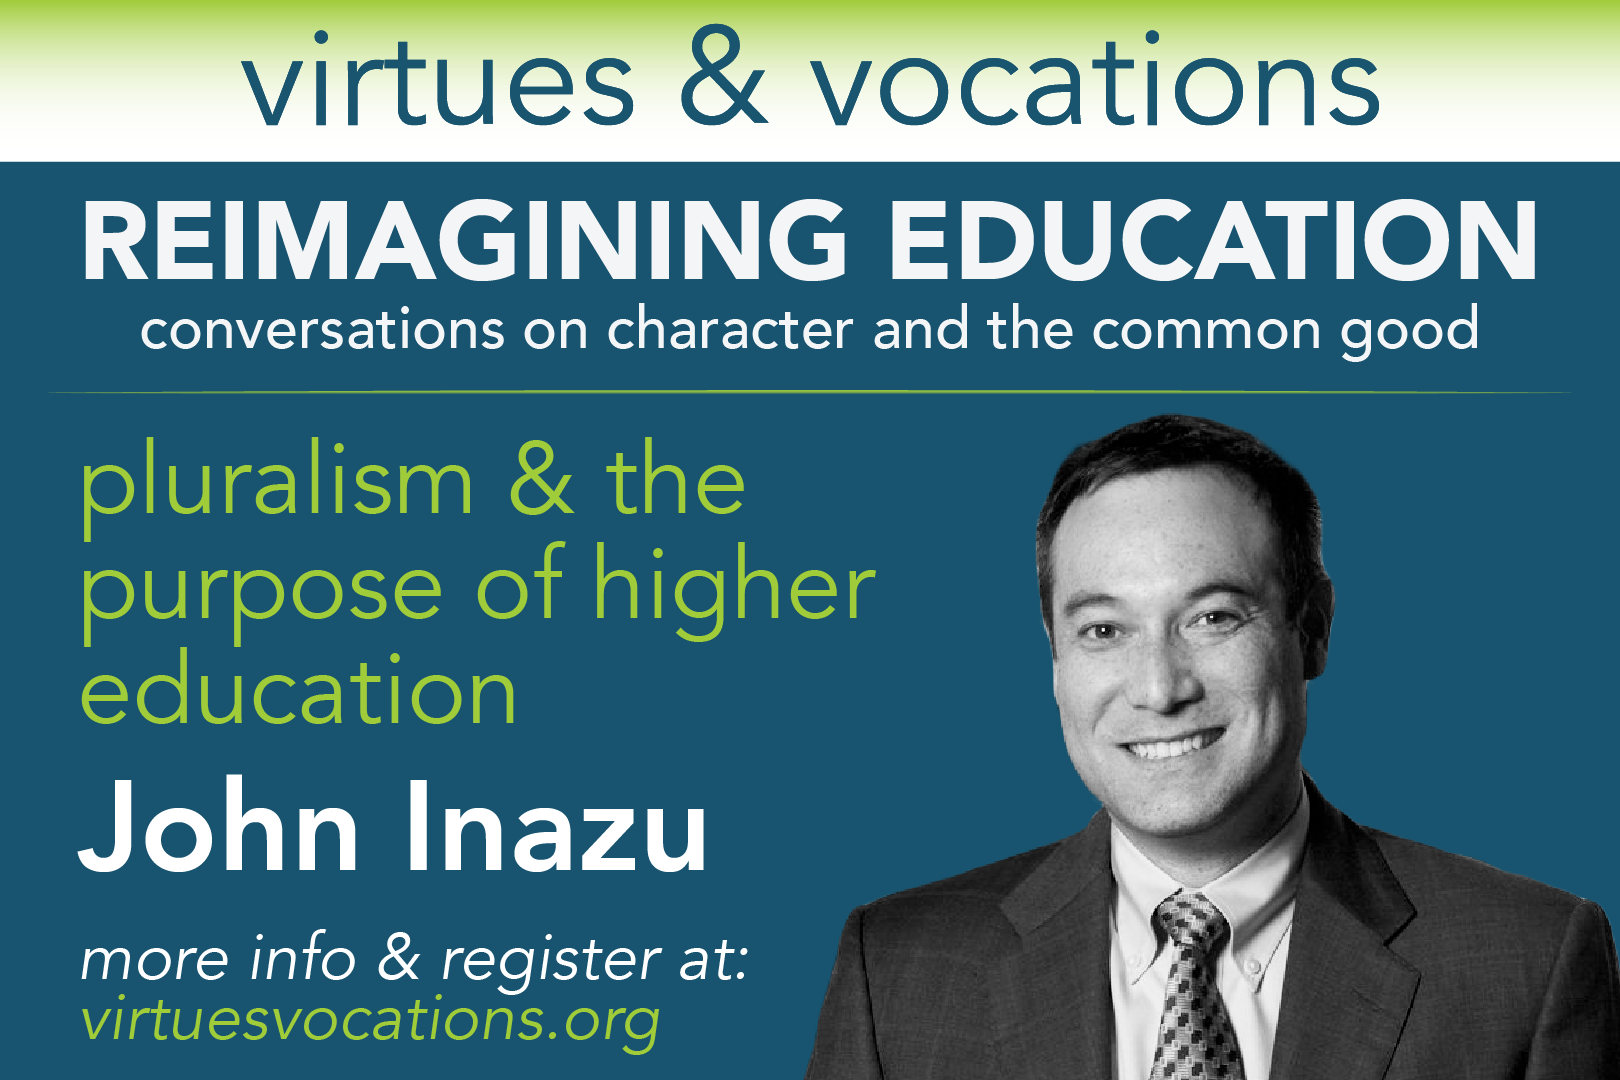 Virtues & Vocations presents John Inazu